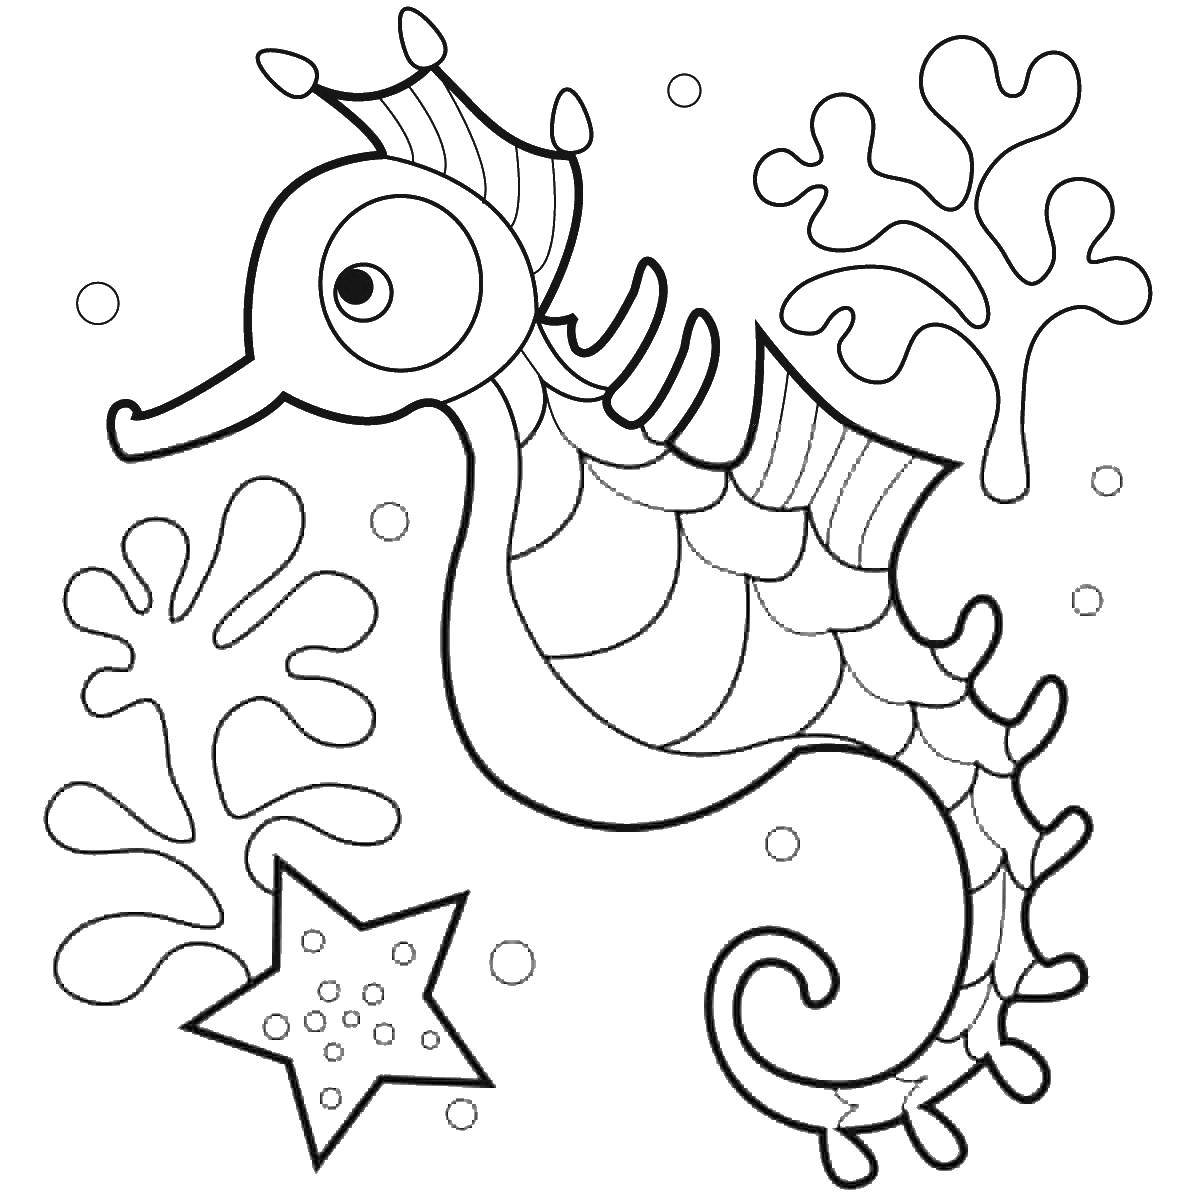 Coloring Seahorse. Category marine. Tags:  marine life, animals, water, seahorse.